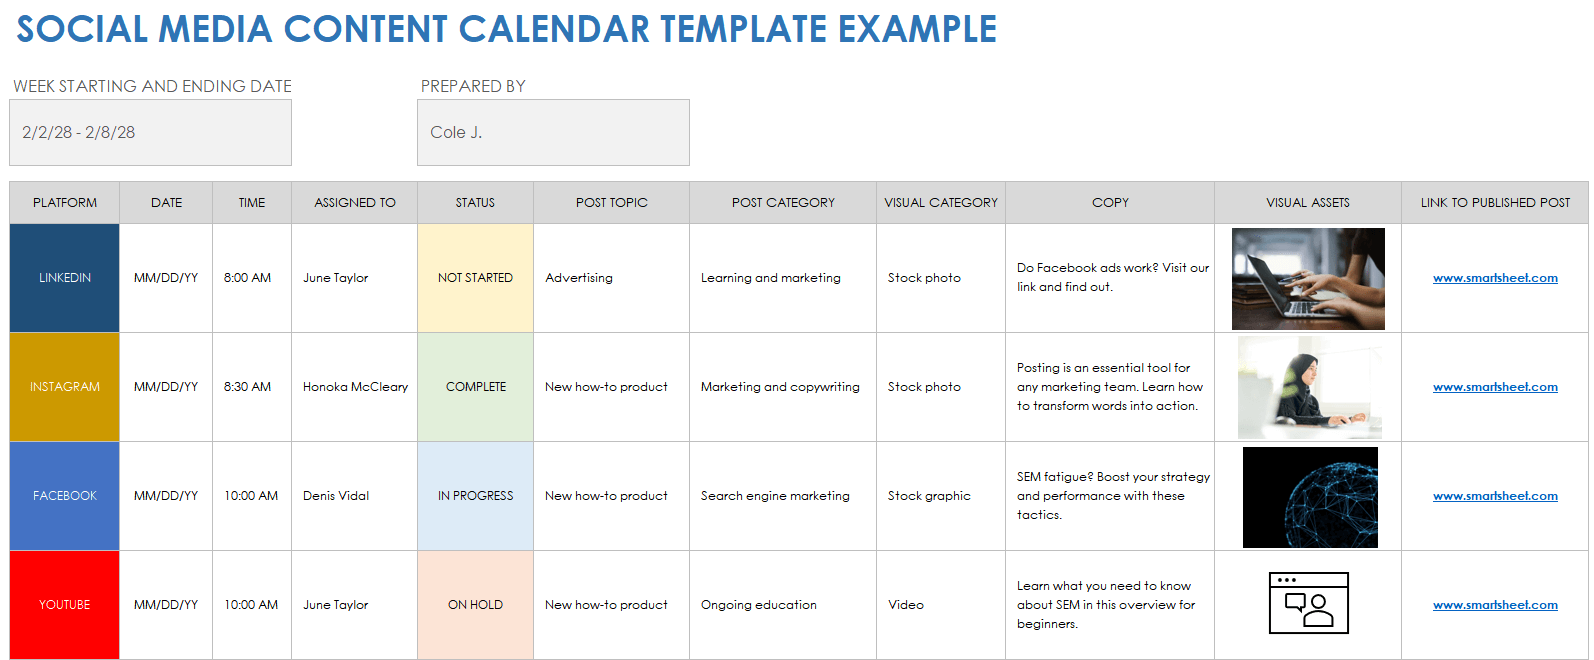 Social Media Content Calendar Example Template